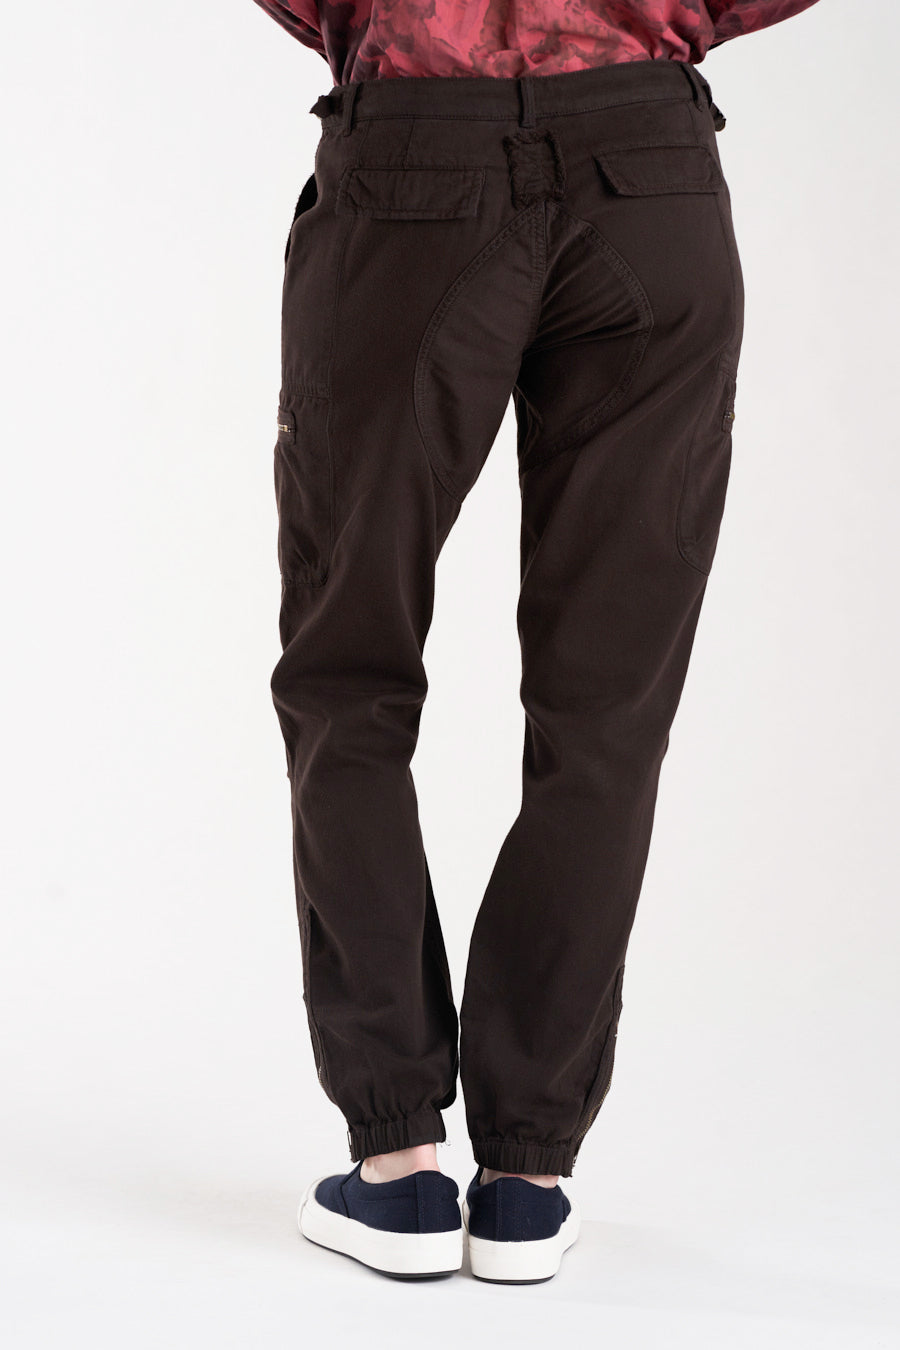 Pants with elastic hem in Licorice